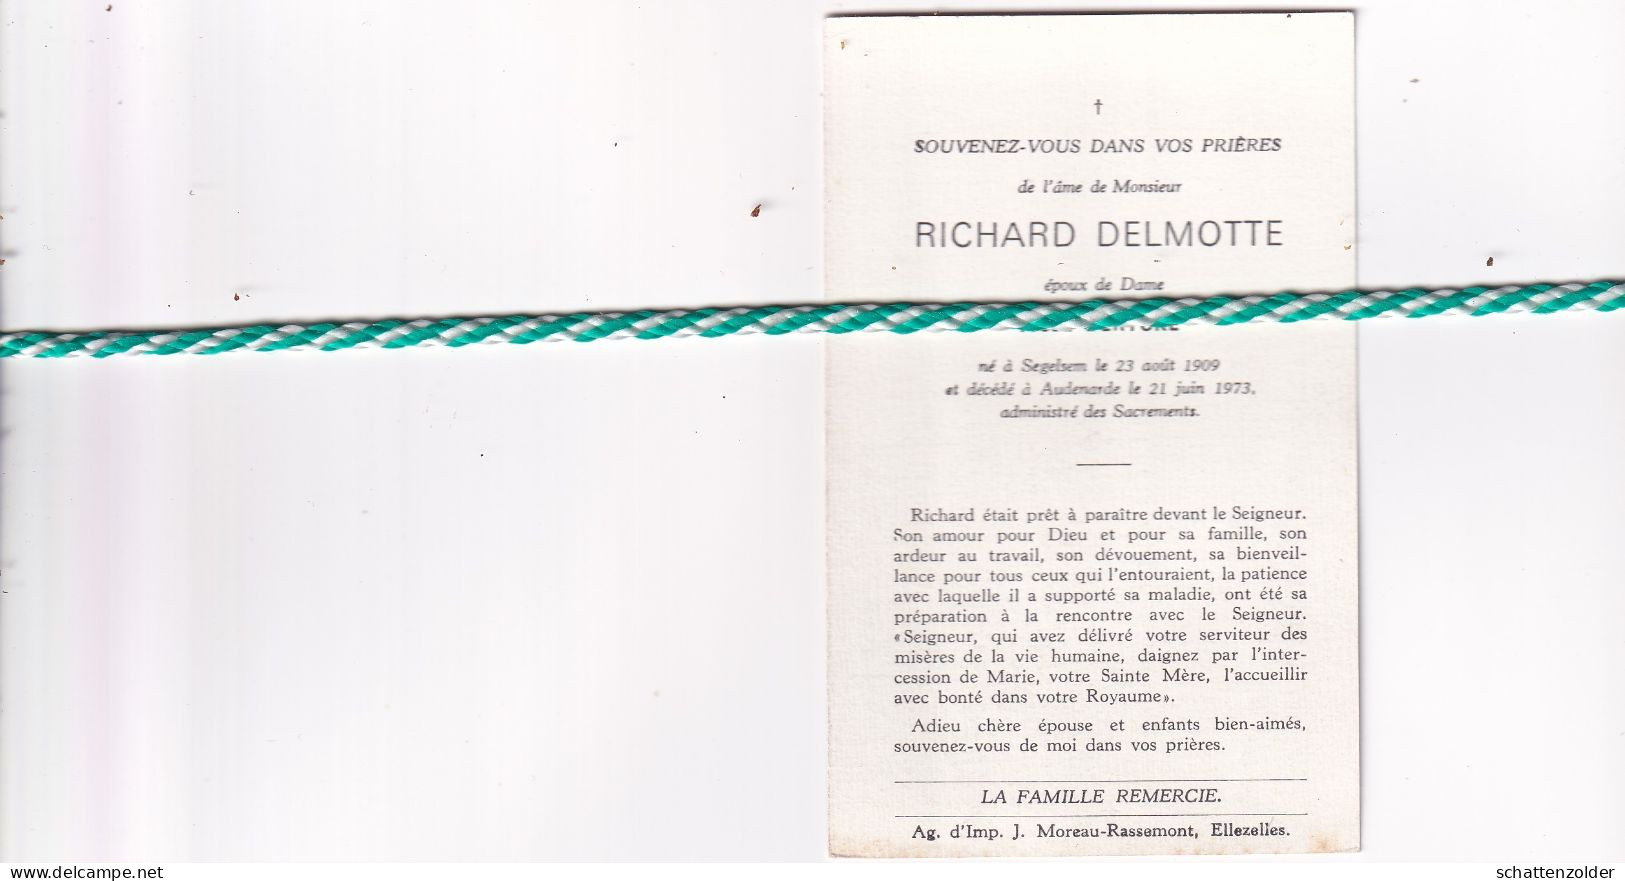 Richard Delmotte-Derycke, Segelsem 1909, Audenarde 1973 - Todesanzeige